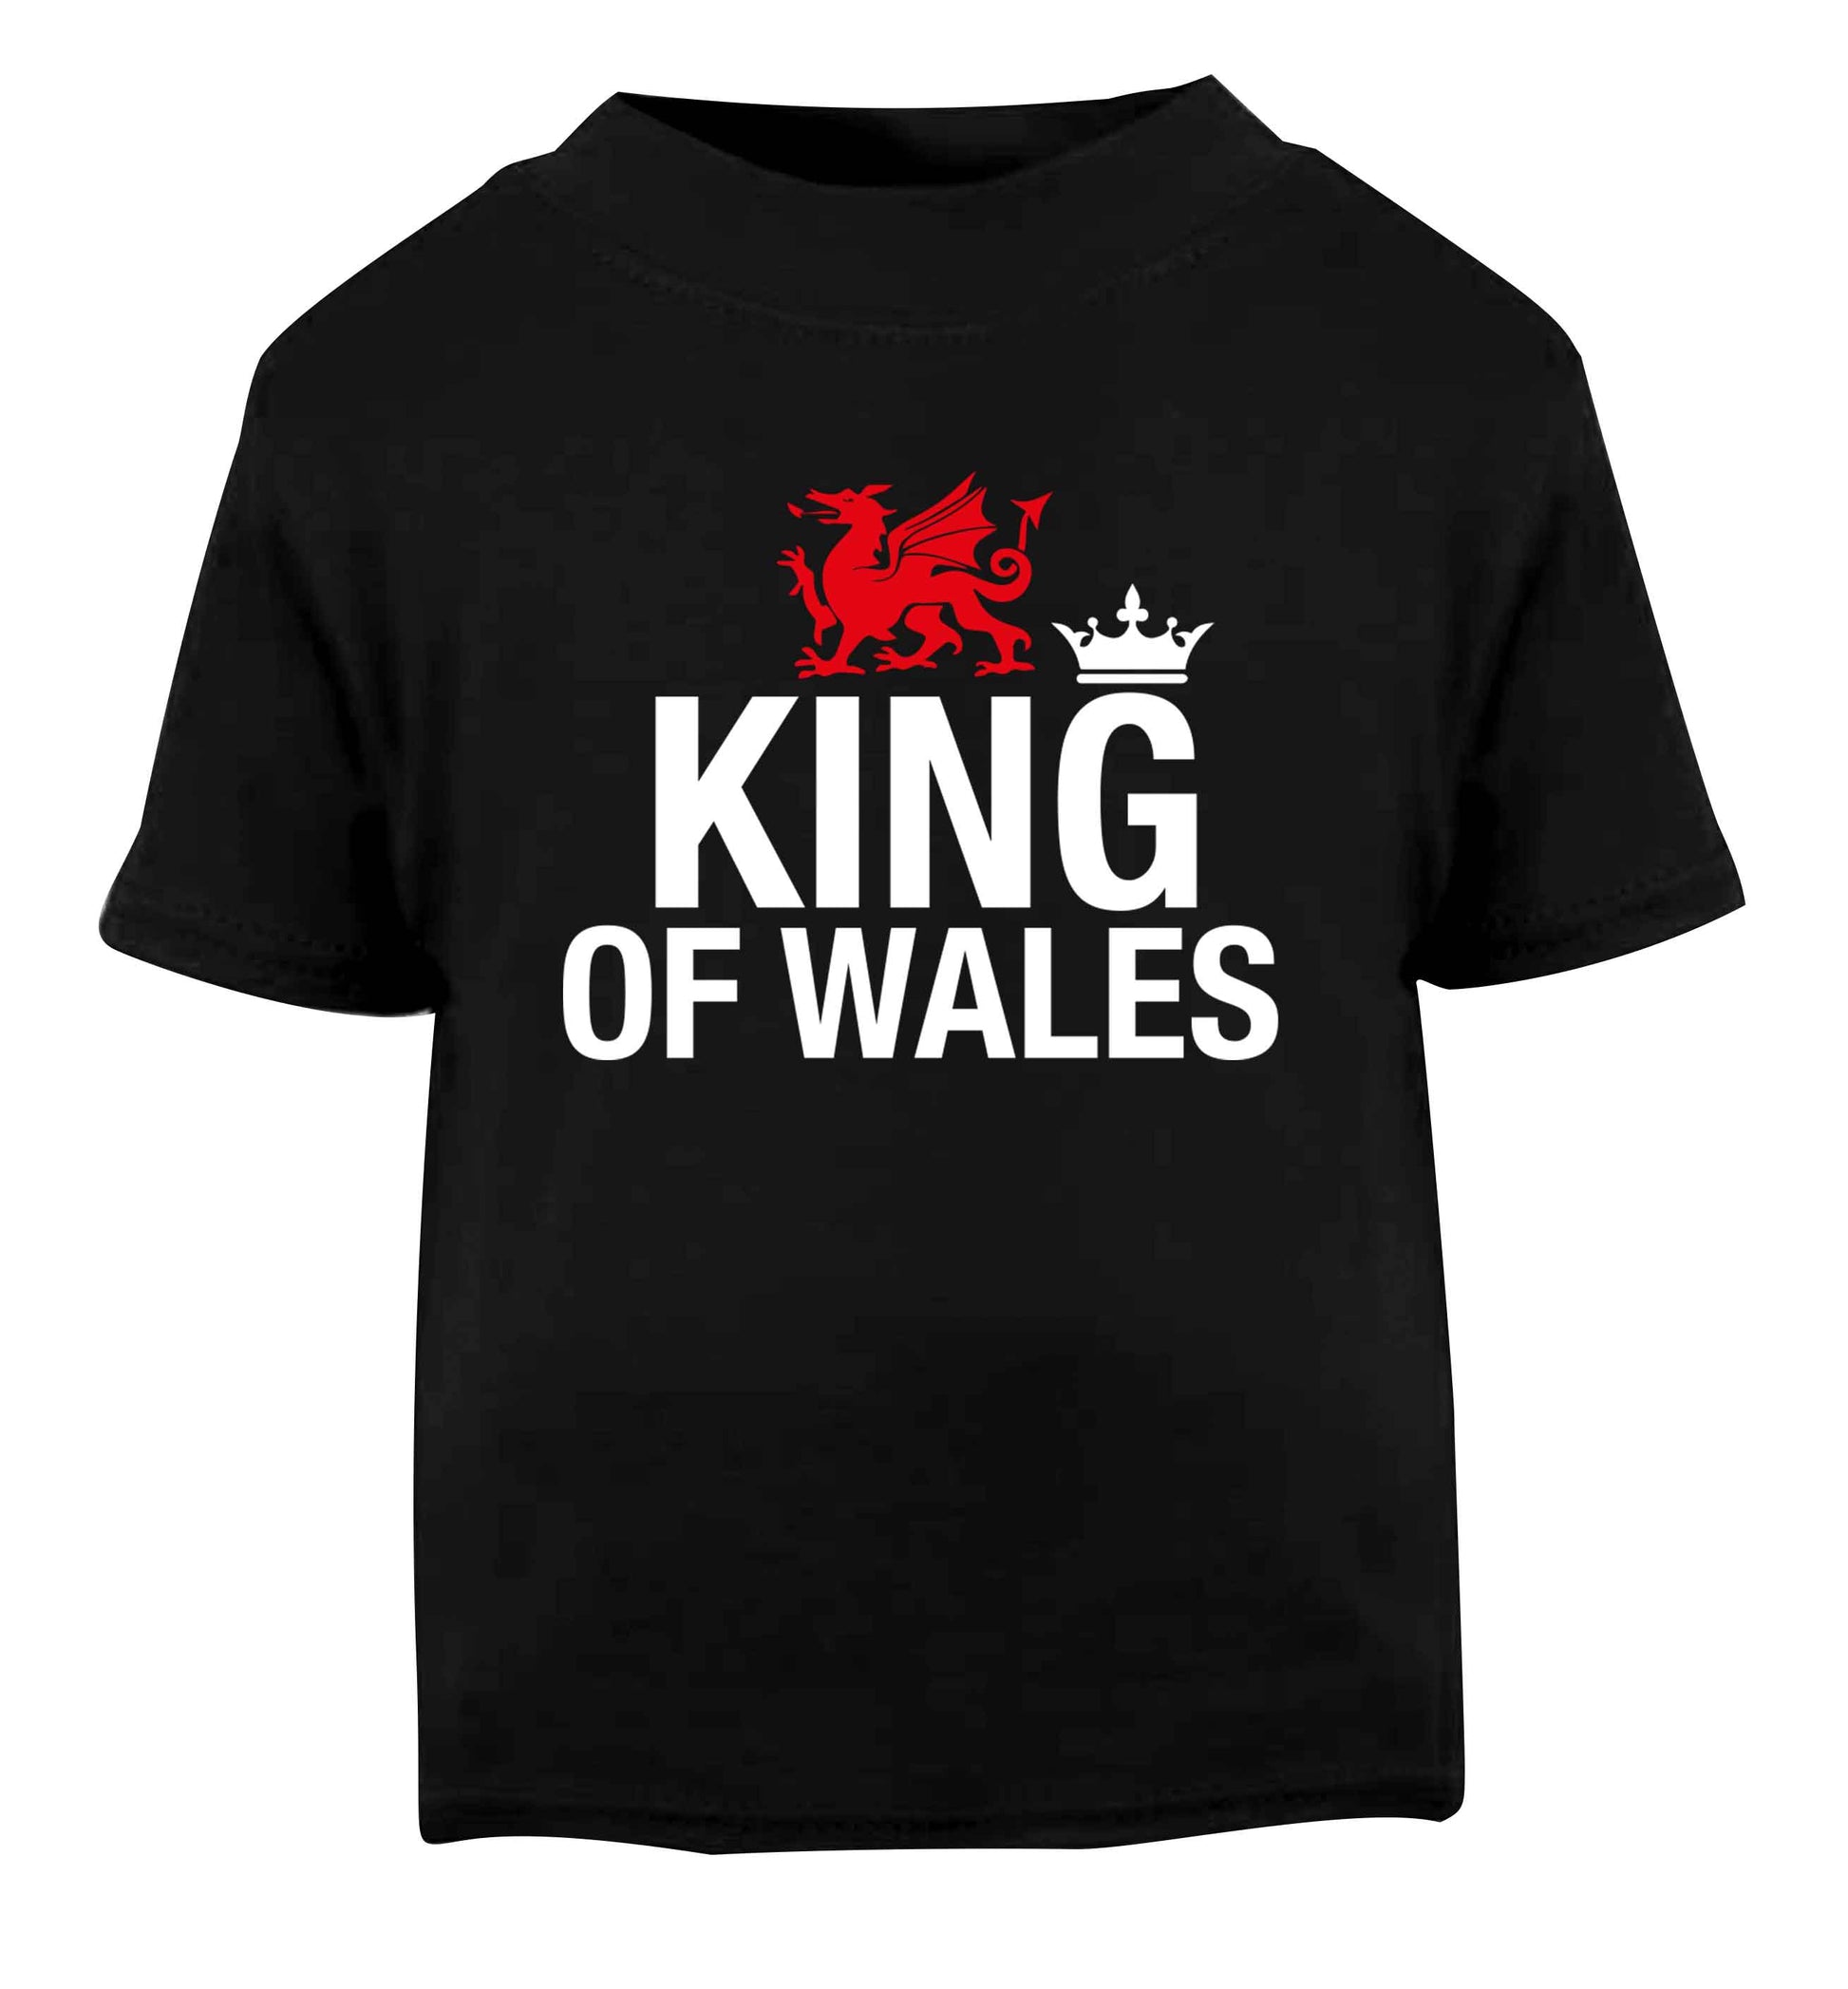 King of Wales Black Baby Toddler Tshirt 2 years